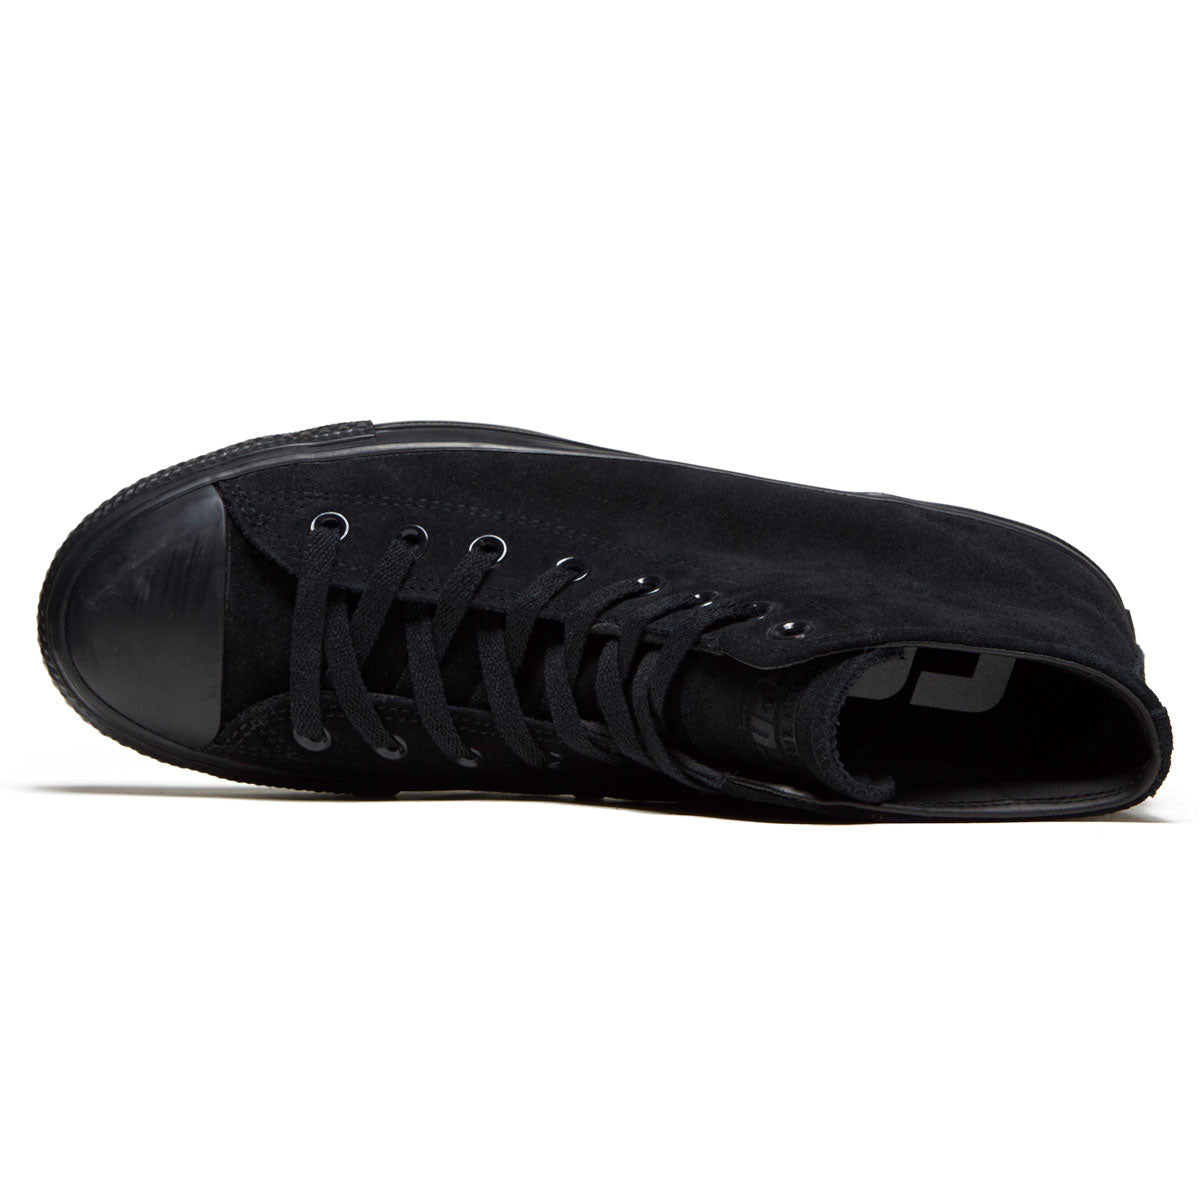 Converse Chuck Taylor All Star Pro Hi Shoes - Black/Black/Black image 3